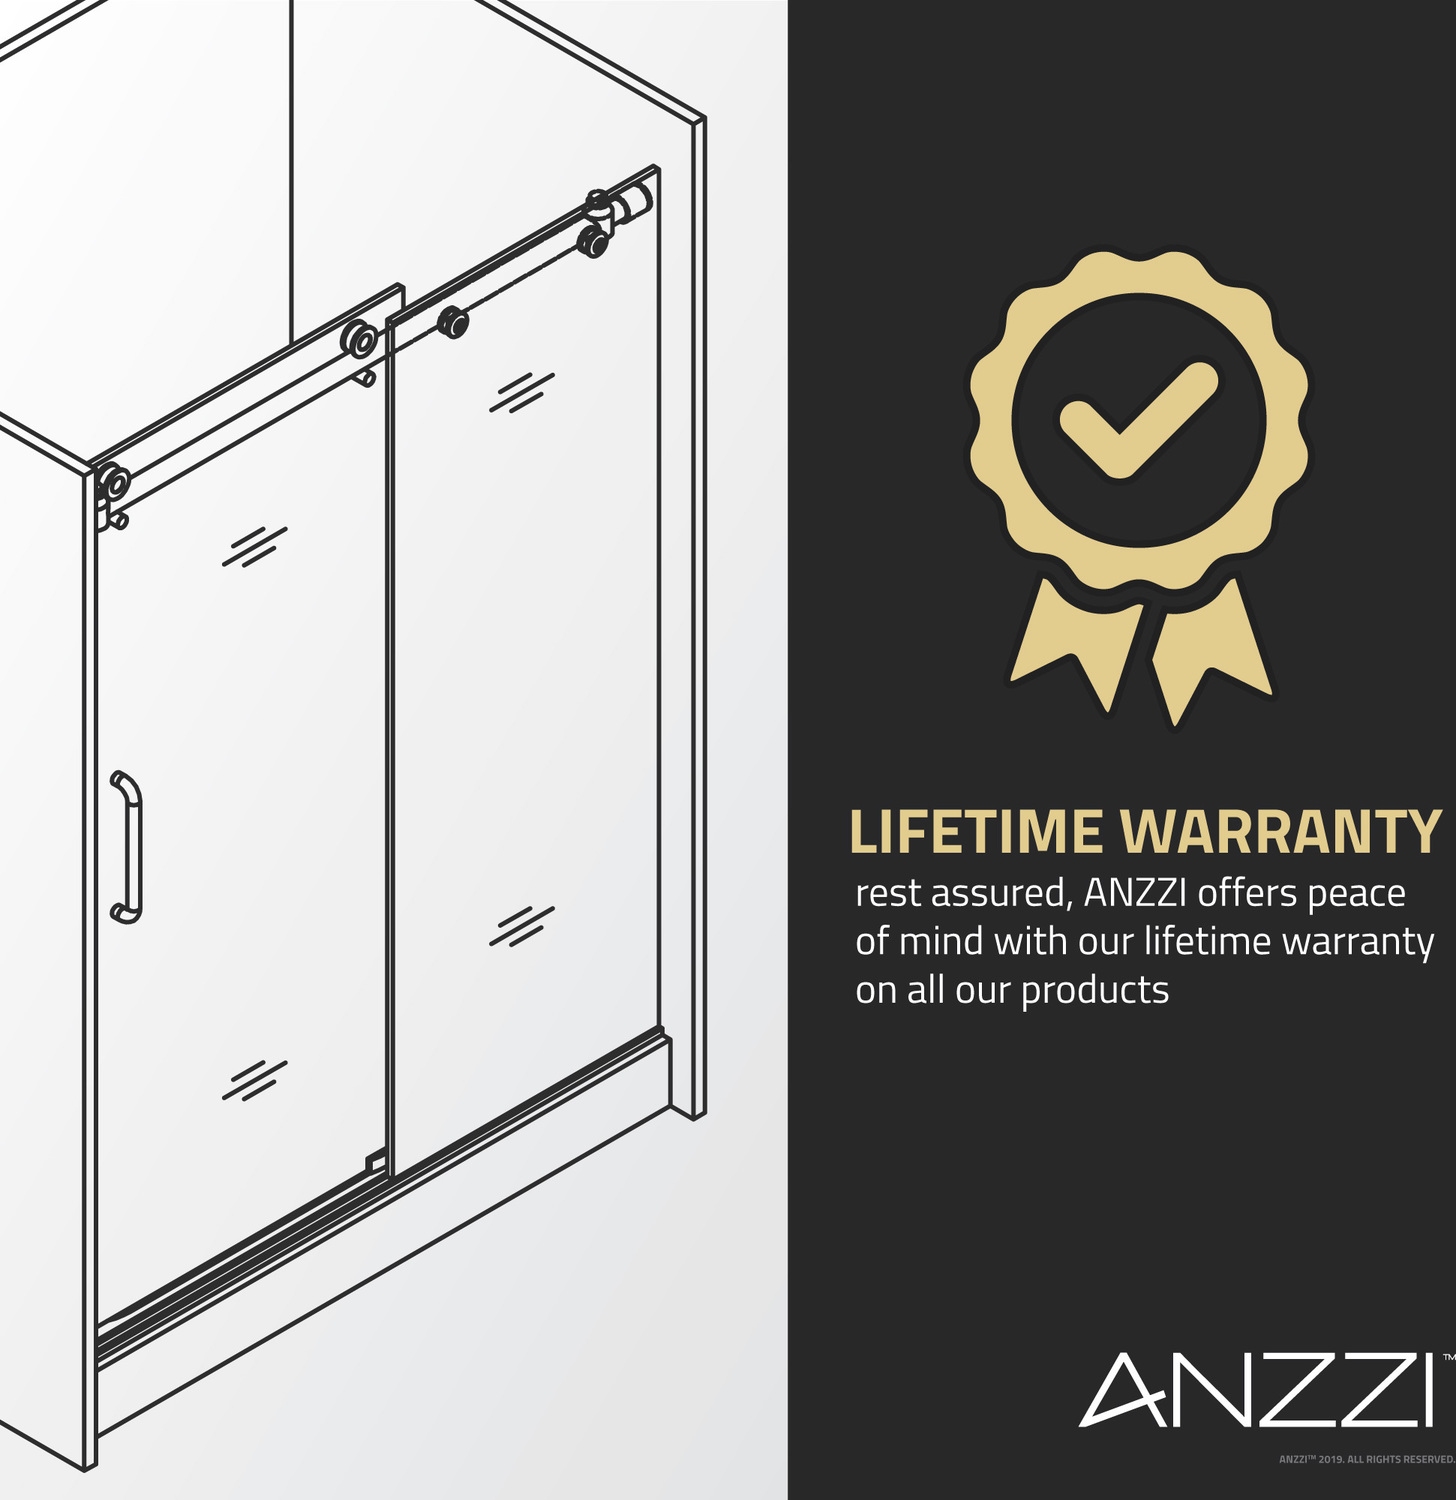 shower screen knob replacement Anzzi SHOWER - Shower Doors - Sliding Black